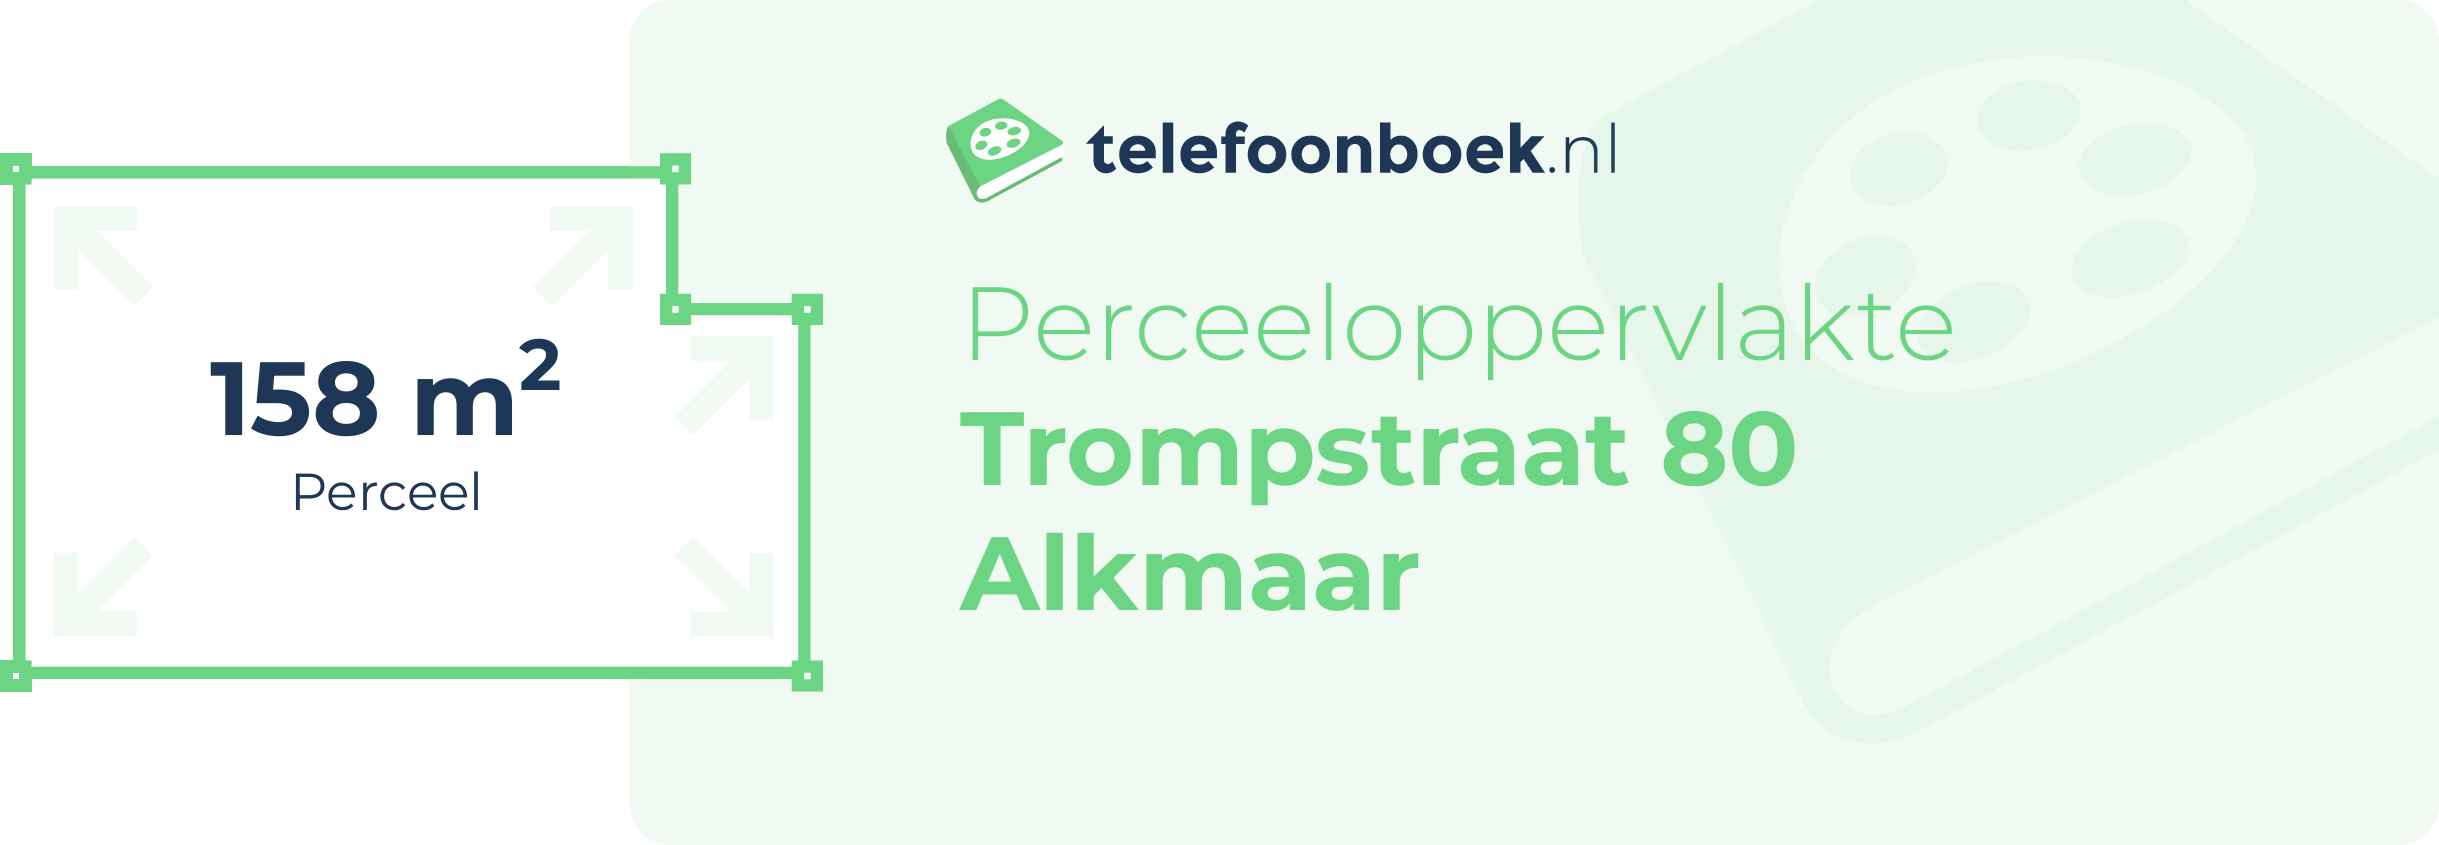 Perceeloppervlakte Trompstraat 80 Alkmaar